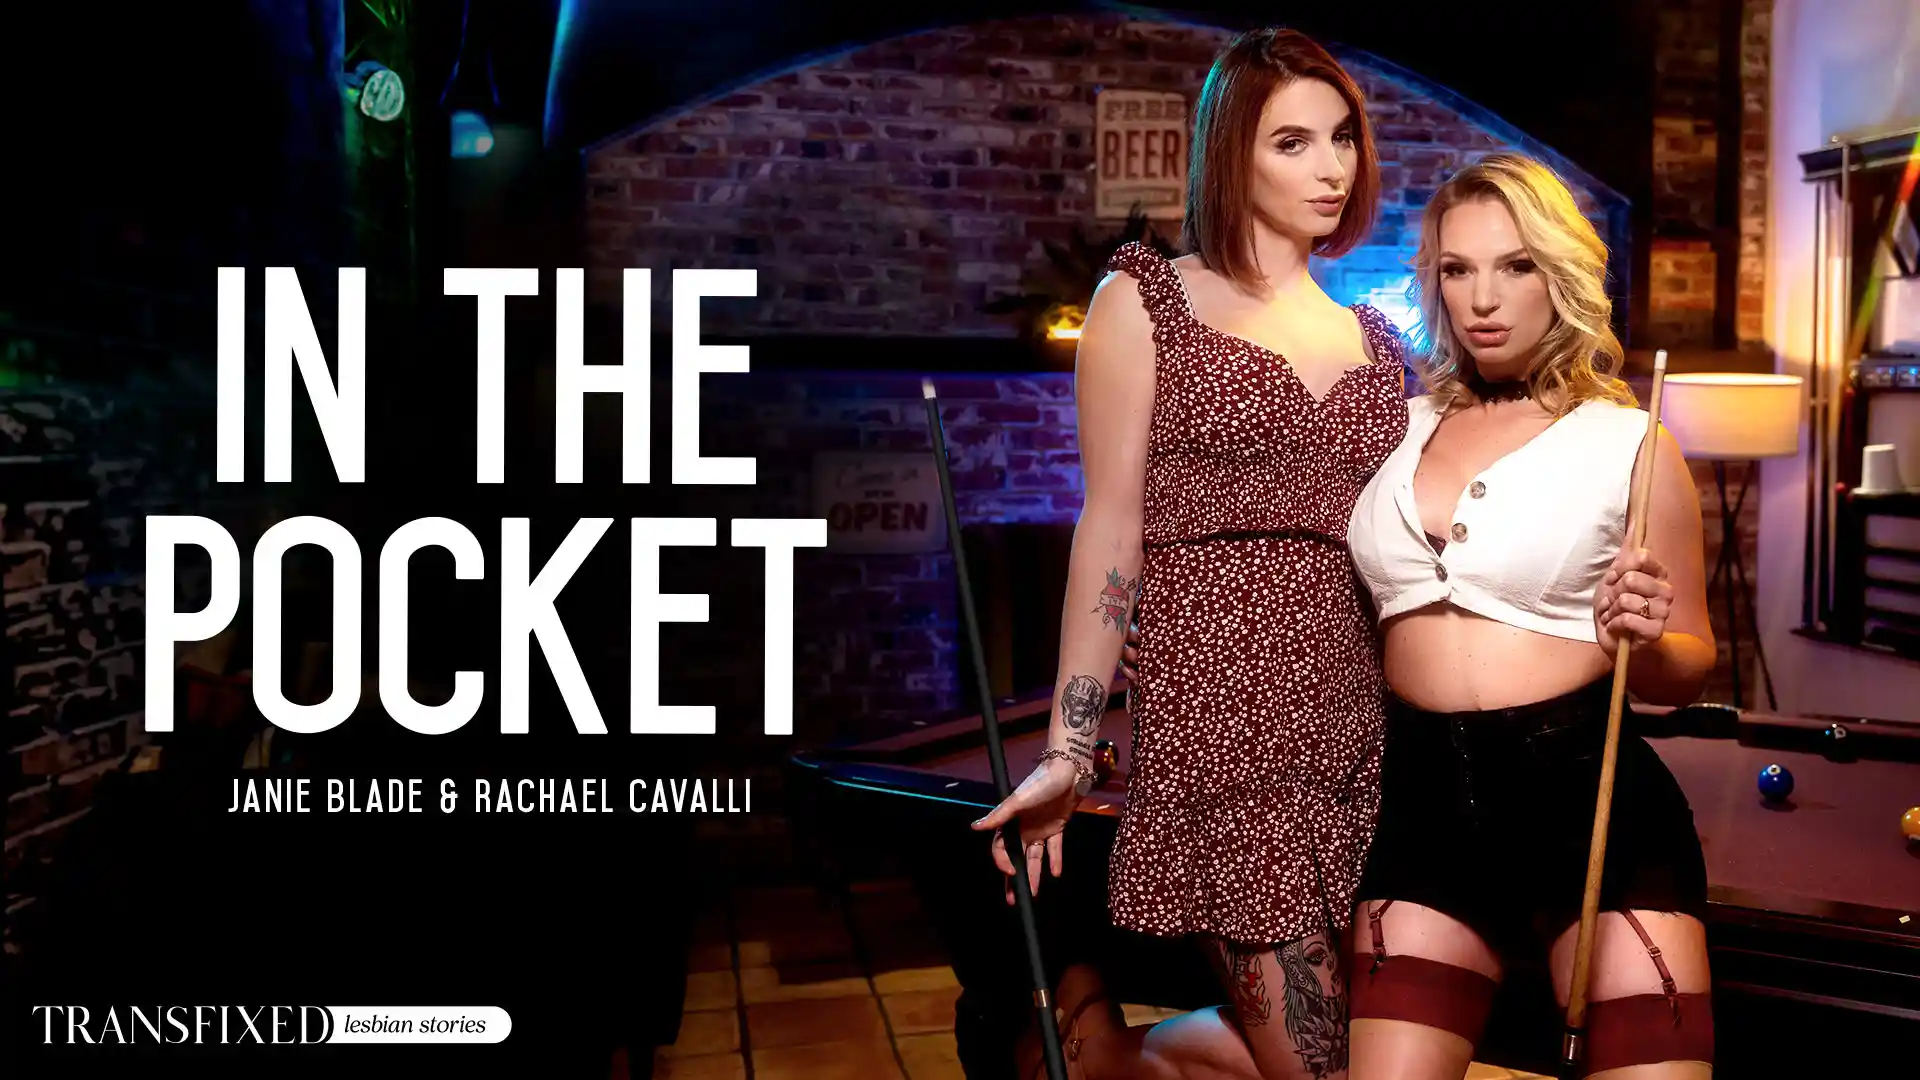 Transfixed Rachael Cavalli & Janie Blade – In The Pocket <i class="fas fa-video"></i>